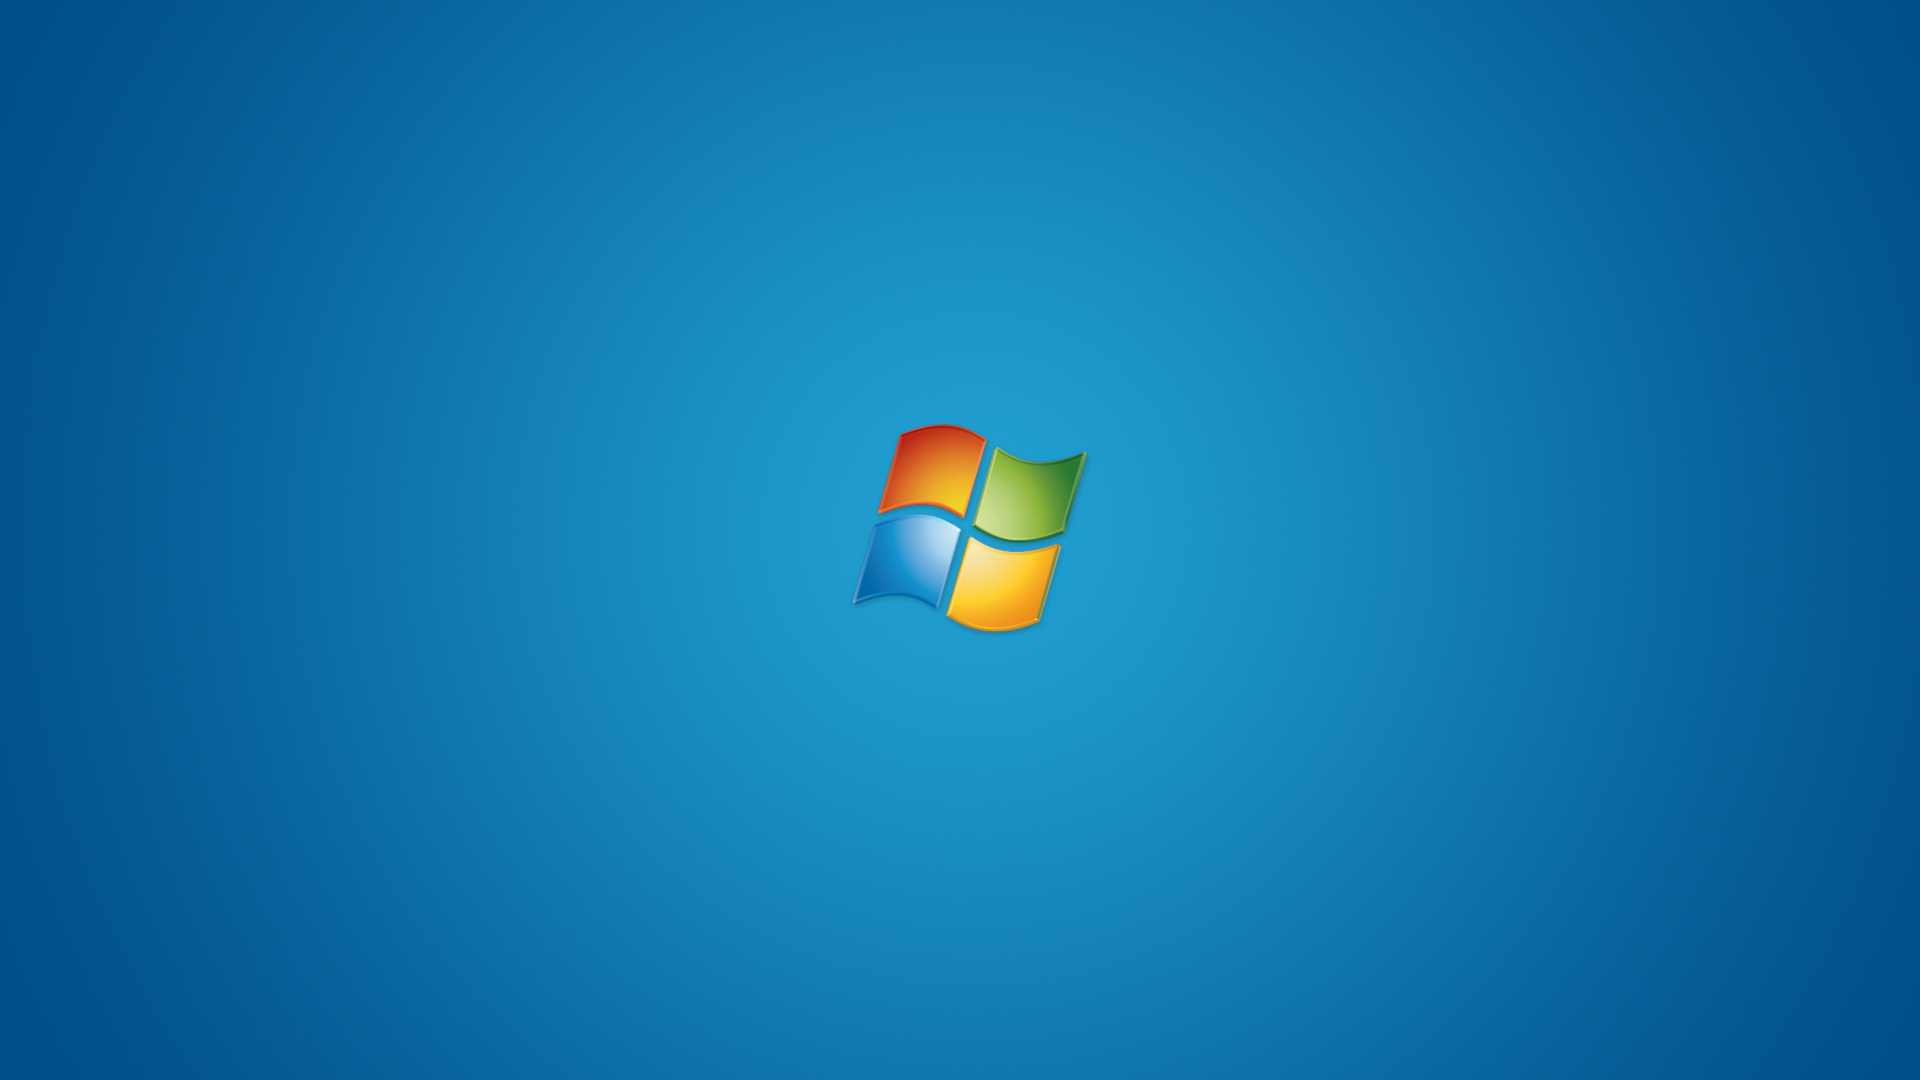 Microsoft Windows Desktop Themes Hot Air